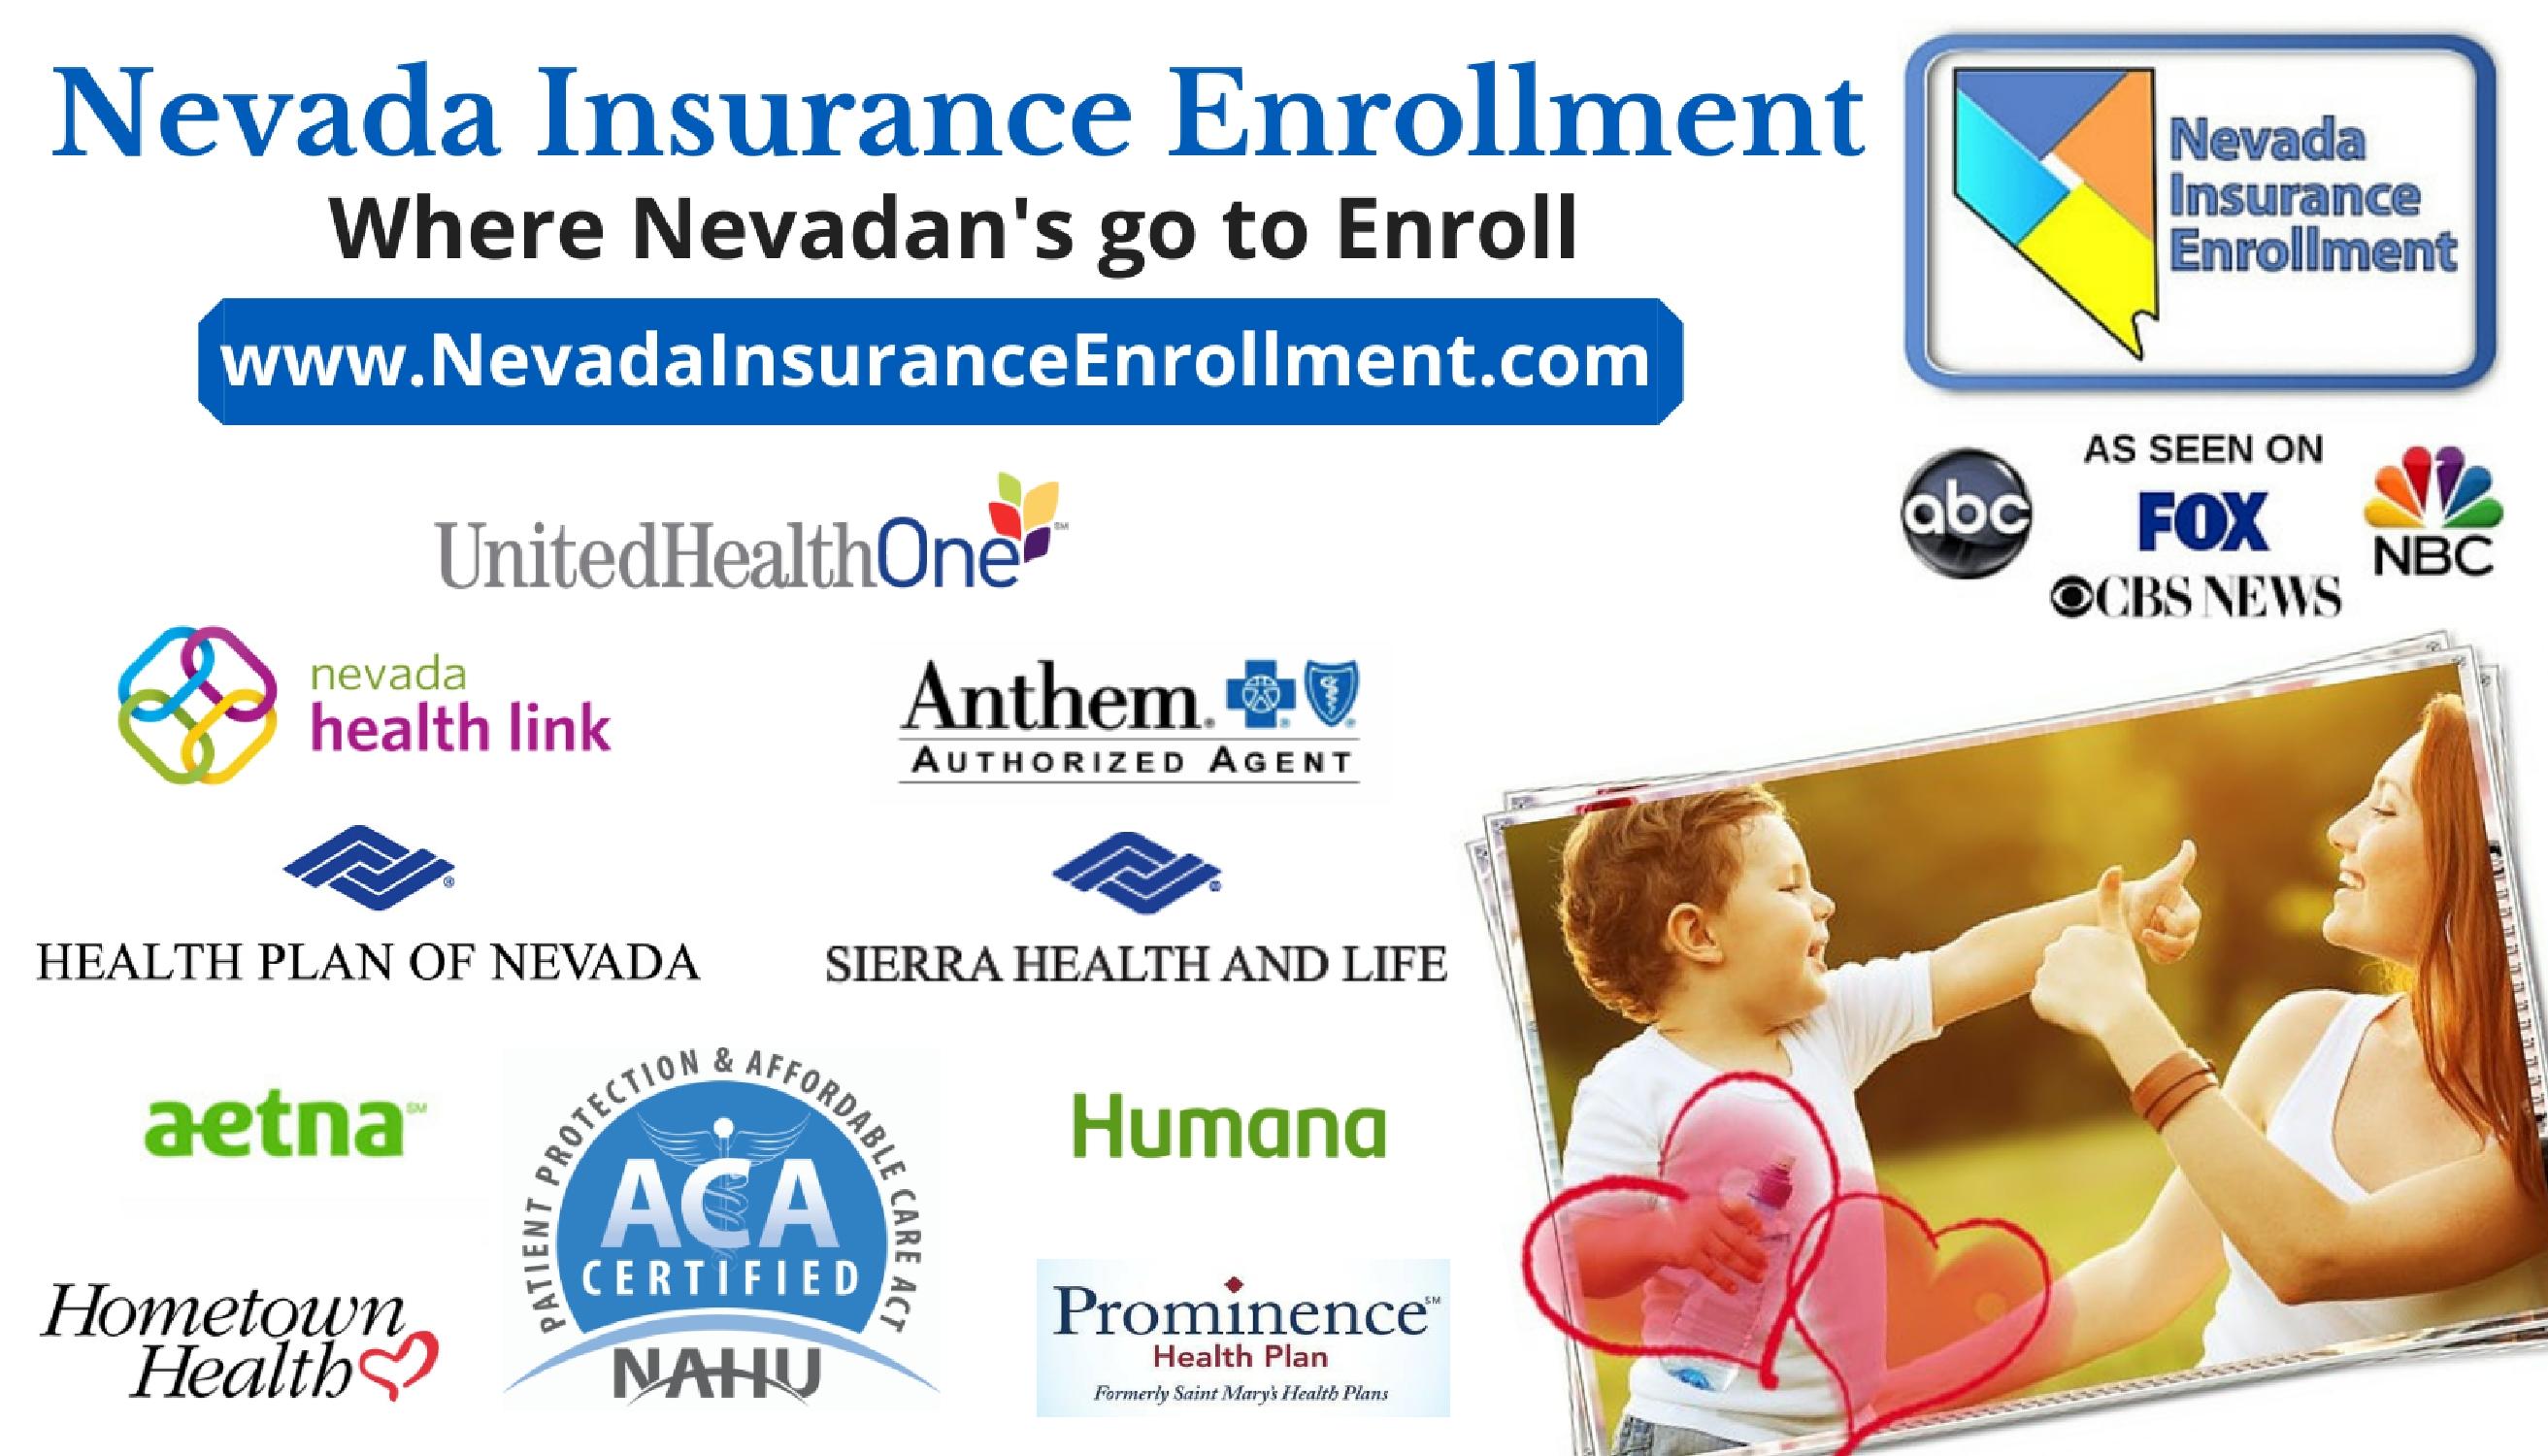 Nevada Insurance Enrollment - Companies We Represent